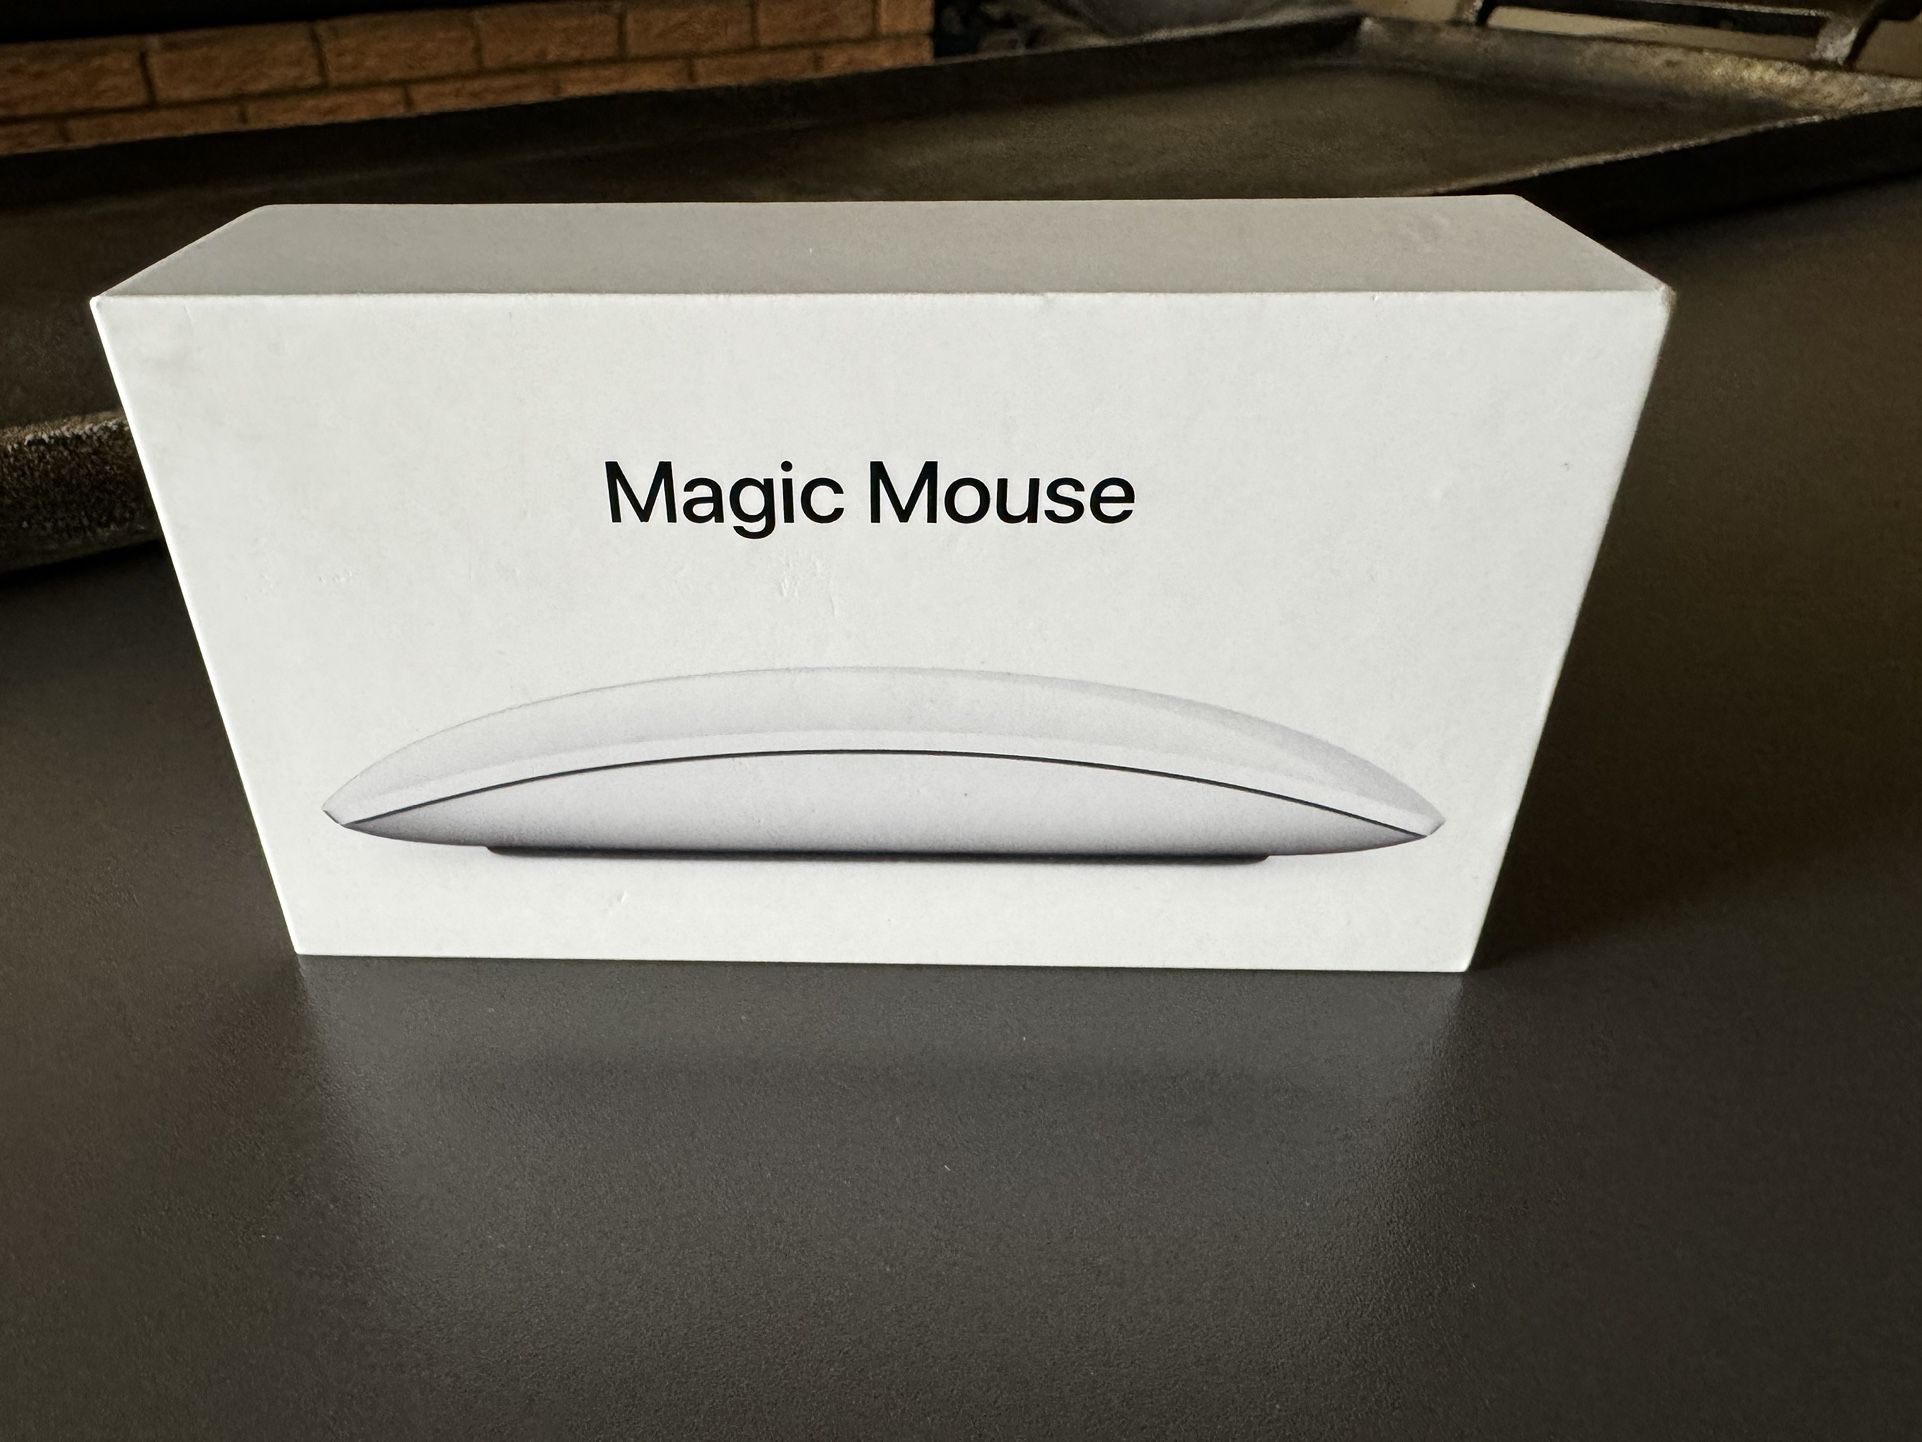 Apple Magic Mouse - White/Silver